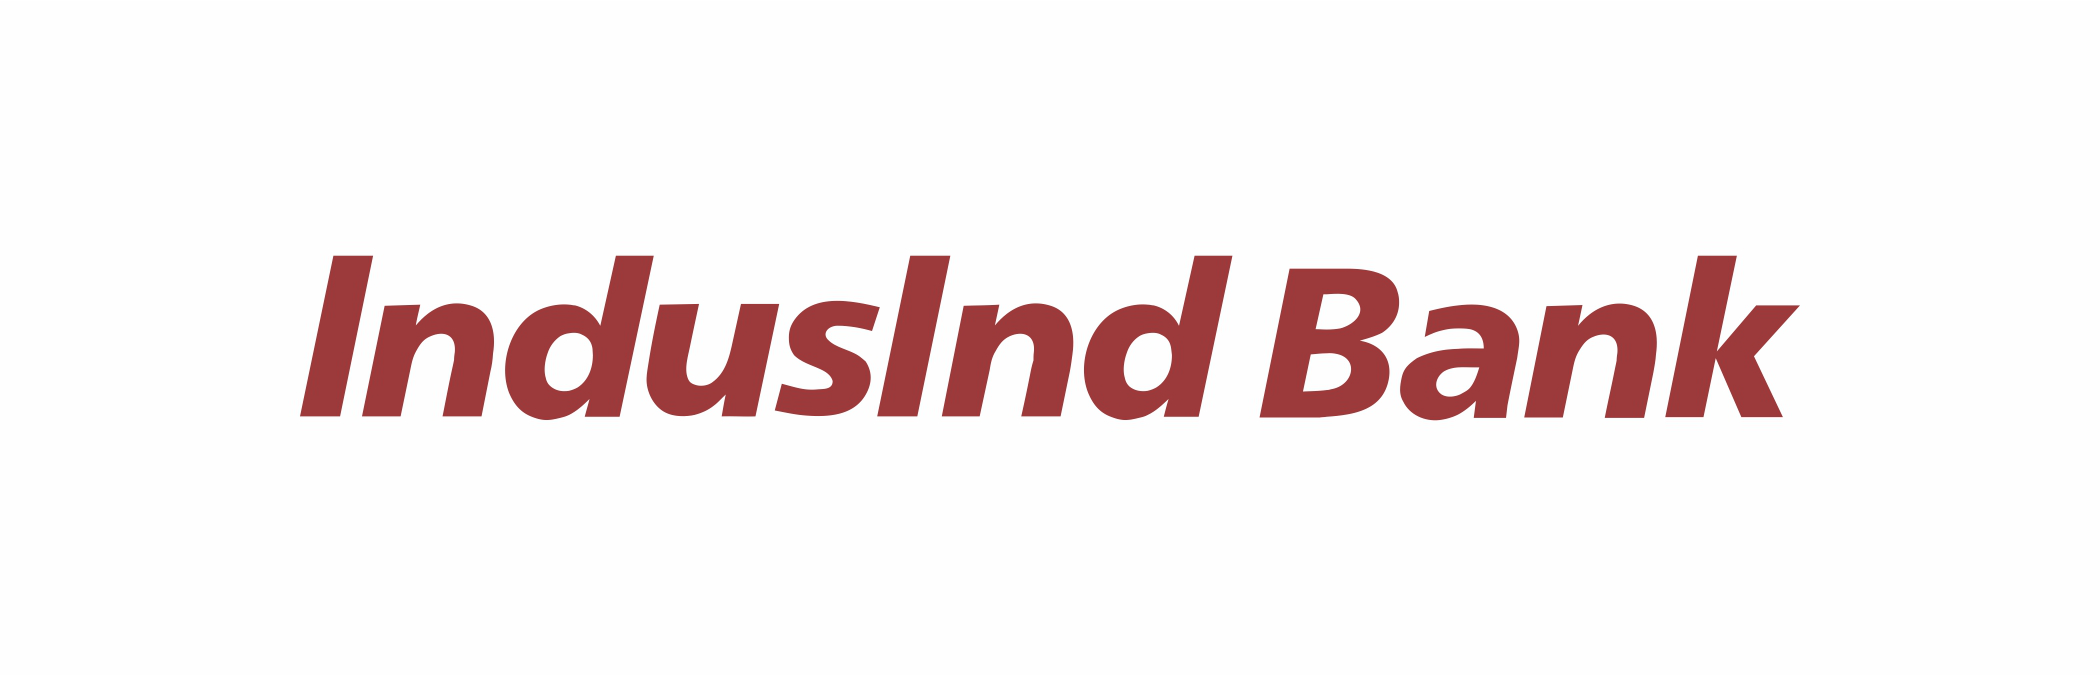 Indusind Bank logo